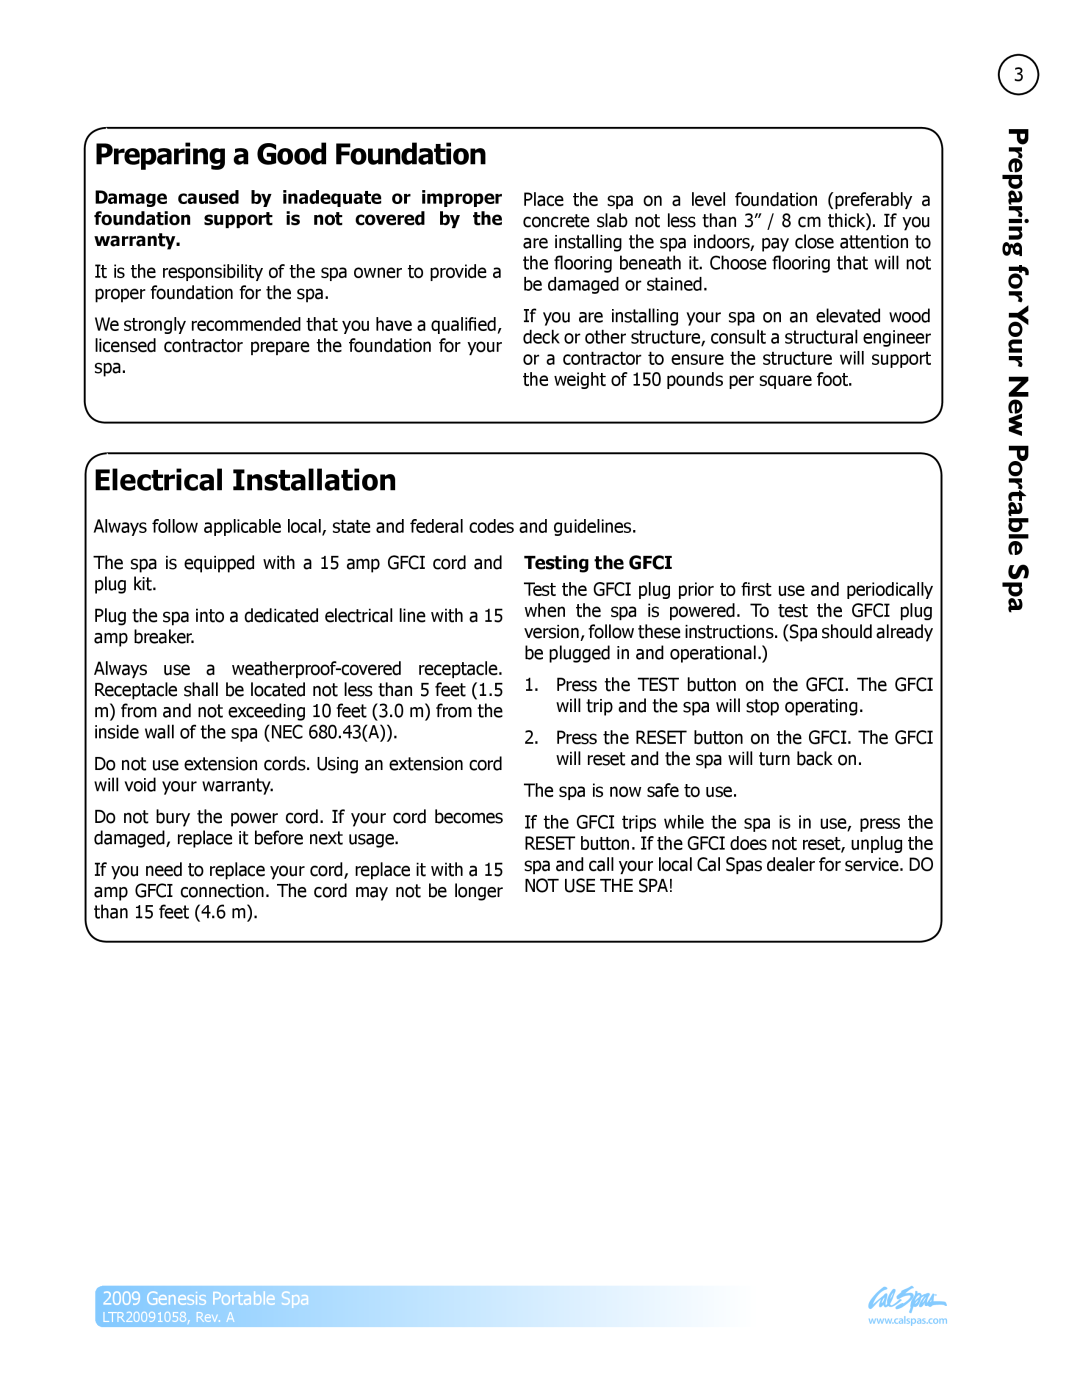 Cal Spas Genesis Portable Spa manual Preparing a Good Foundation, Electrical Installation, Testing the GFCI 